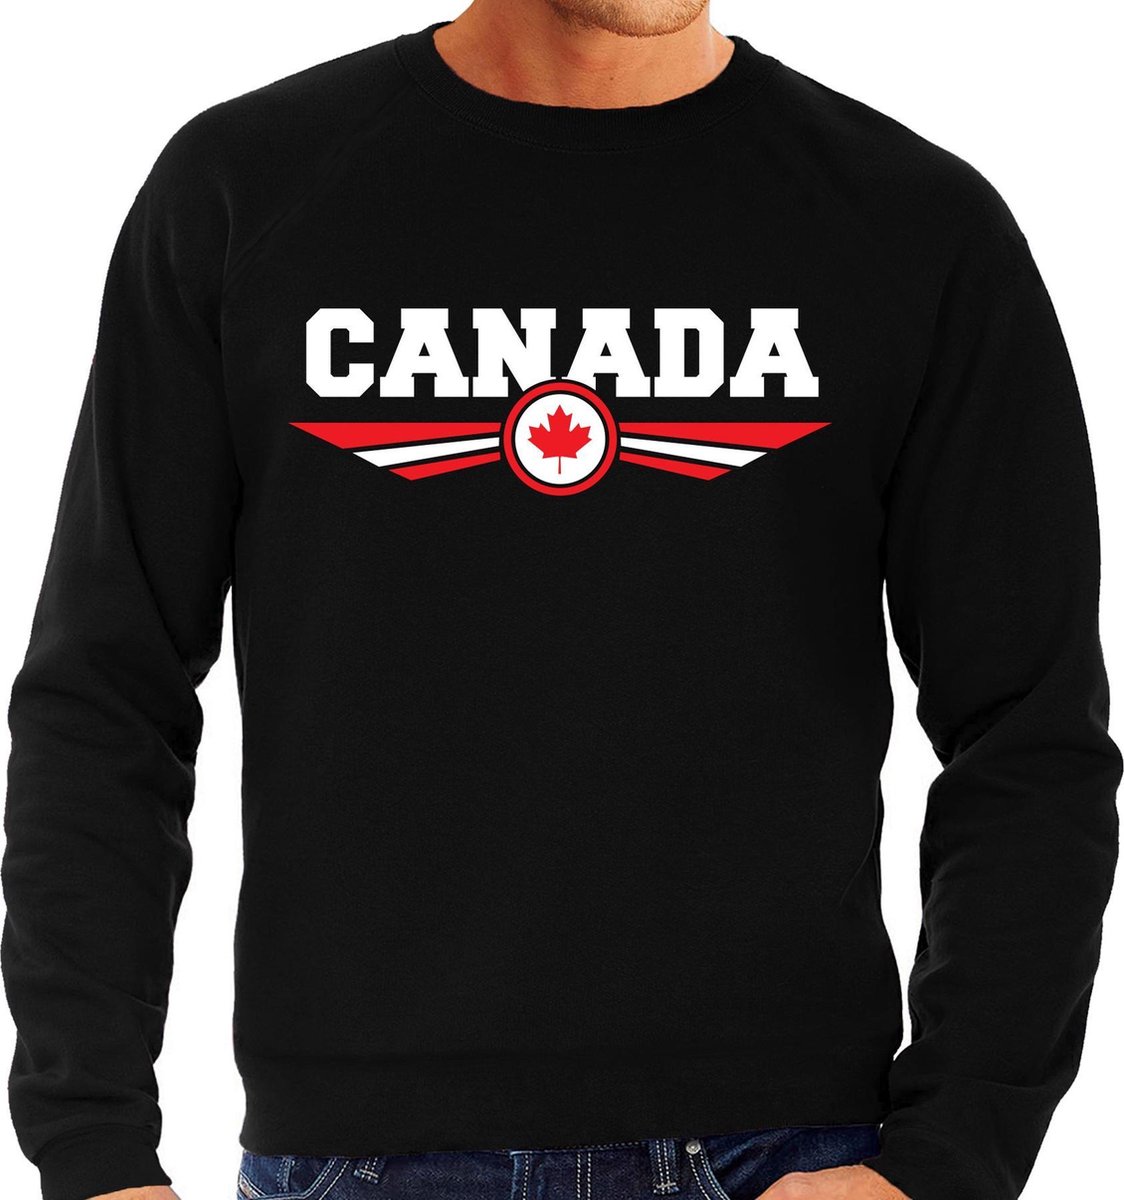 Canada landen sweater / trui zwart heren M